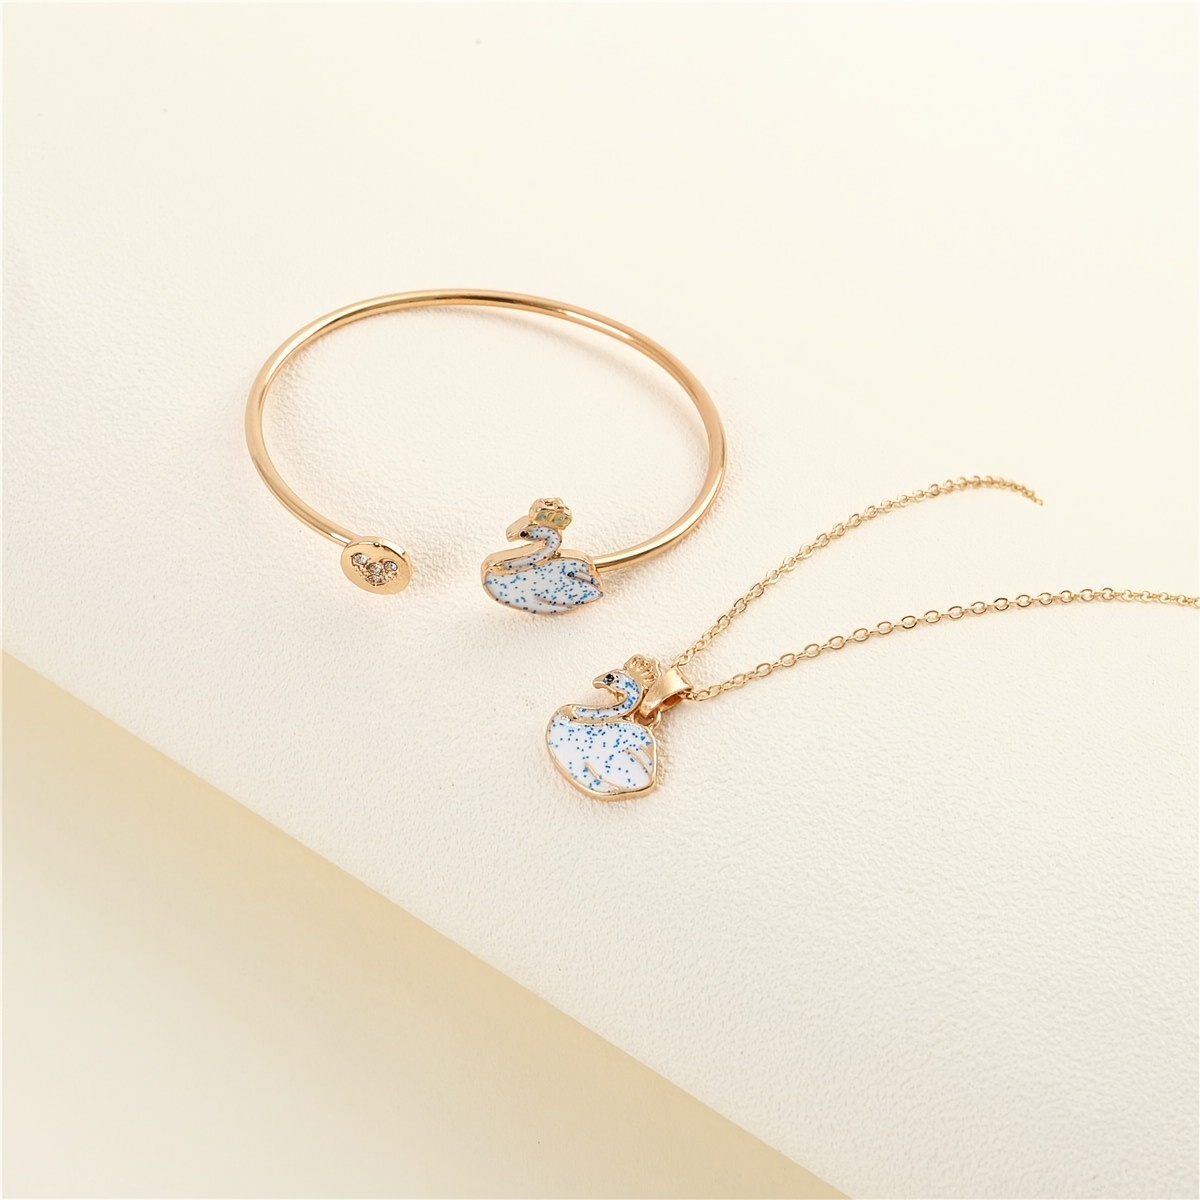 Girls Elegant Alloy Swan Pendant Necklace Bracelet Set Decorative Accessories Gifts